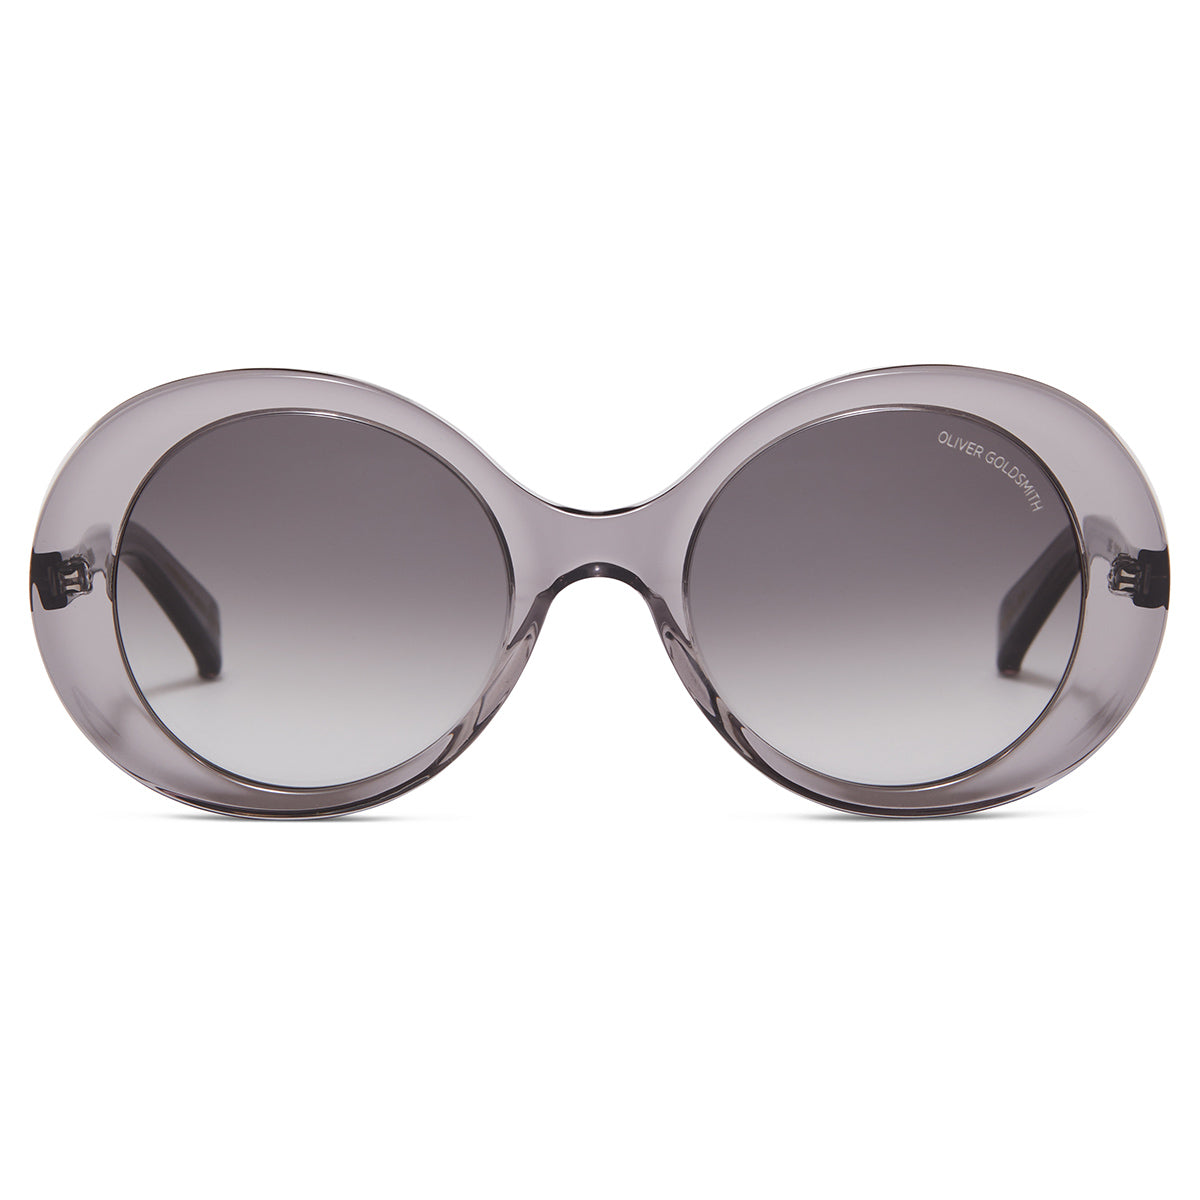 1960s Oliver | Round Sunglasses Goldsmith The